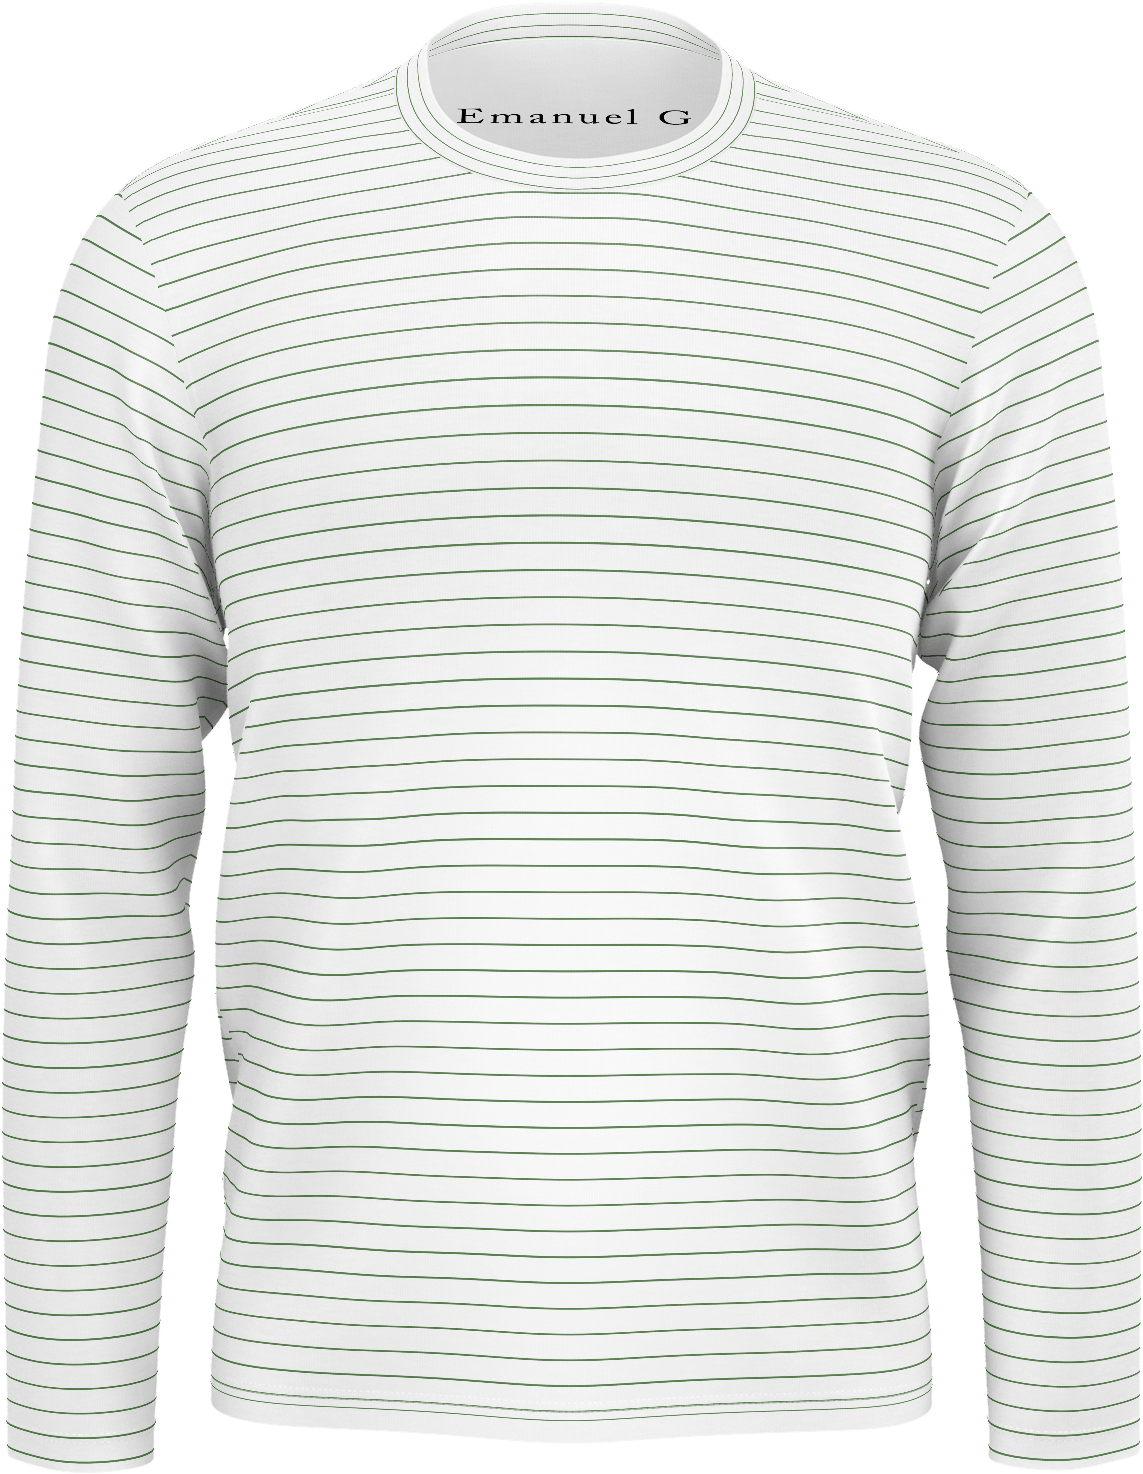 Striped Long Sleeve Shirt Mockup